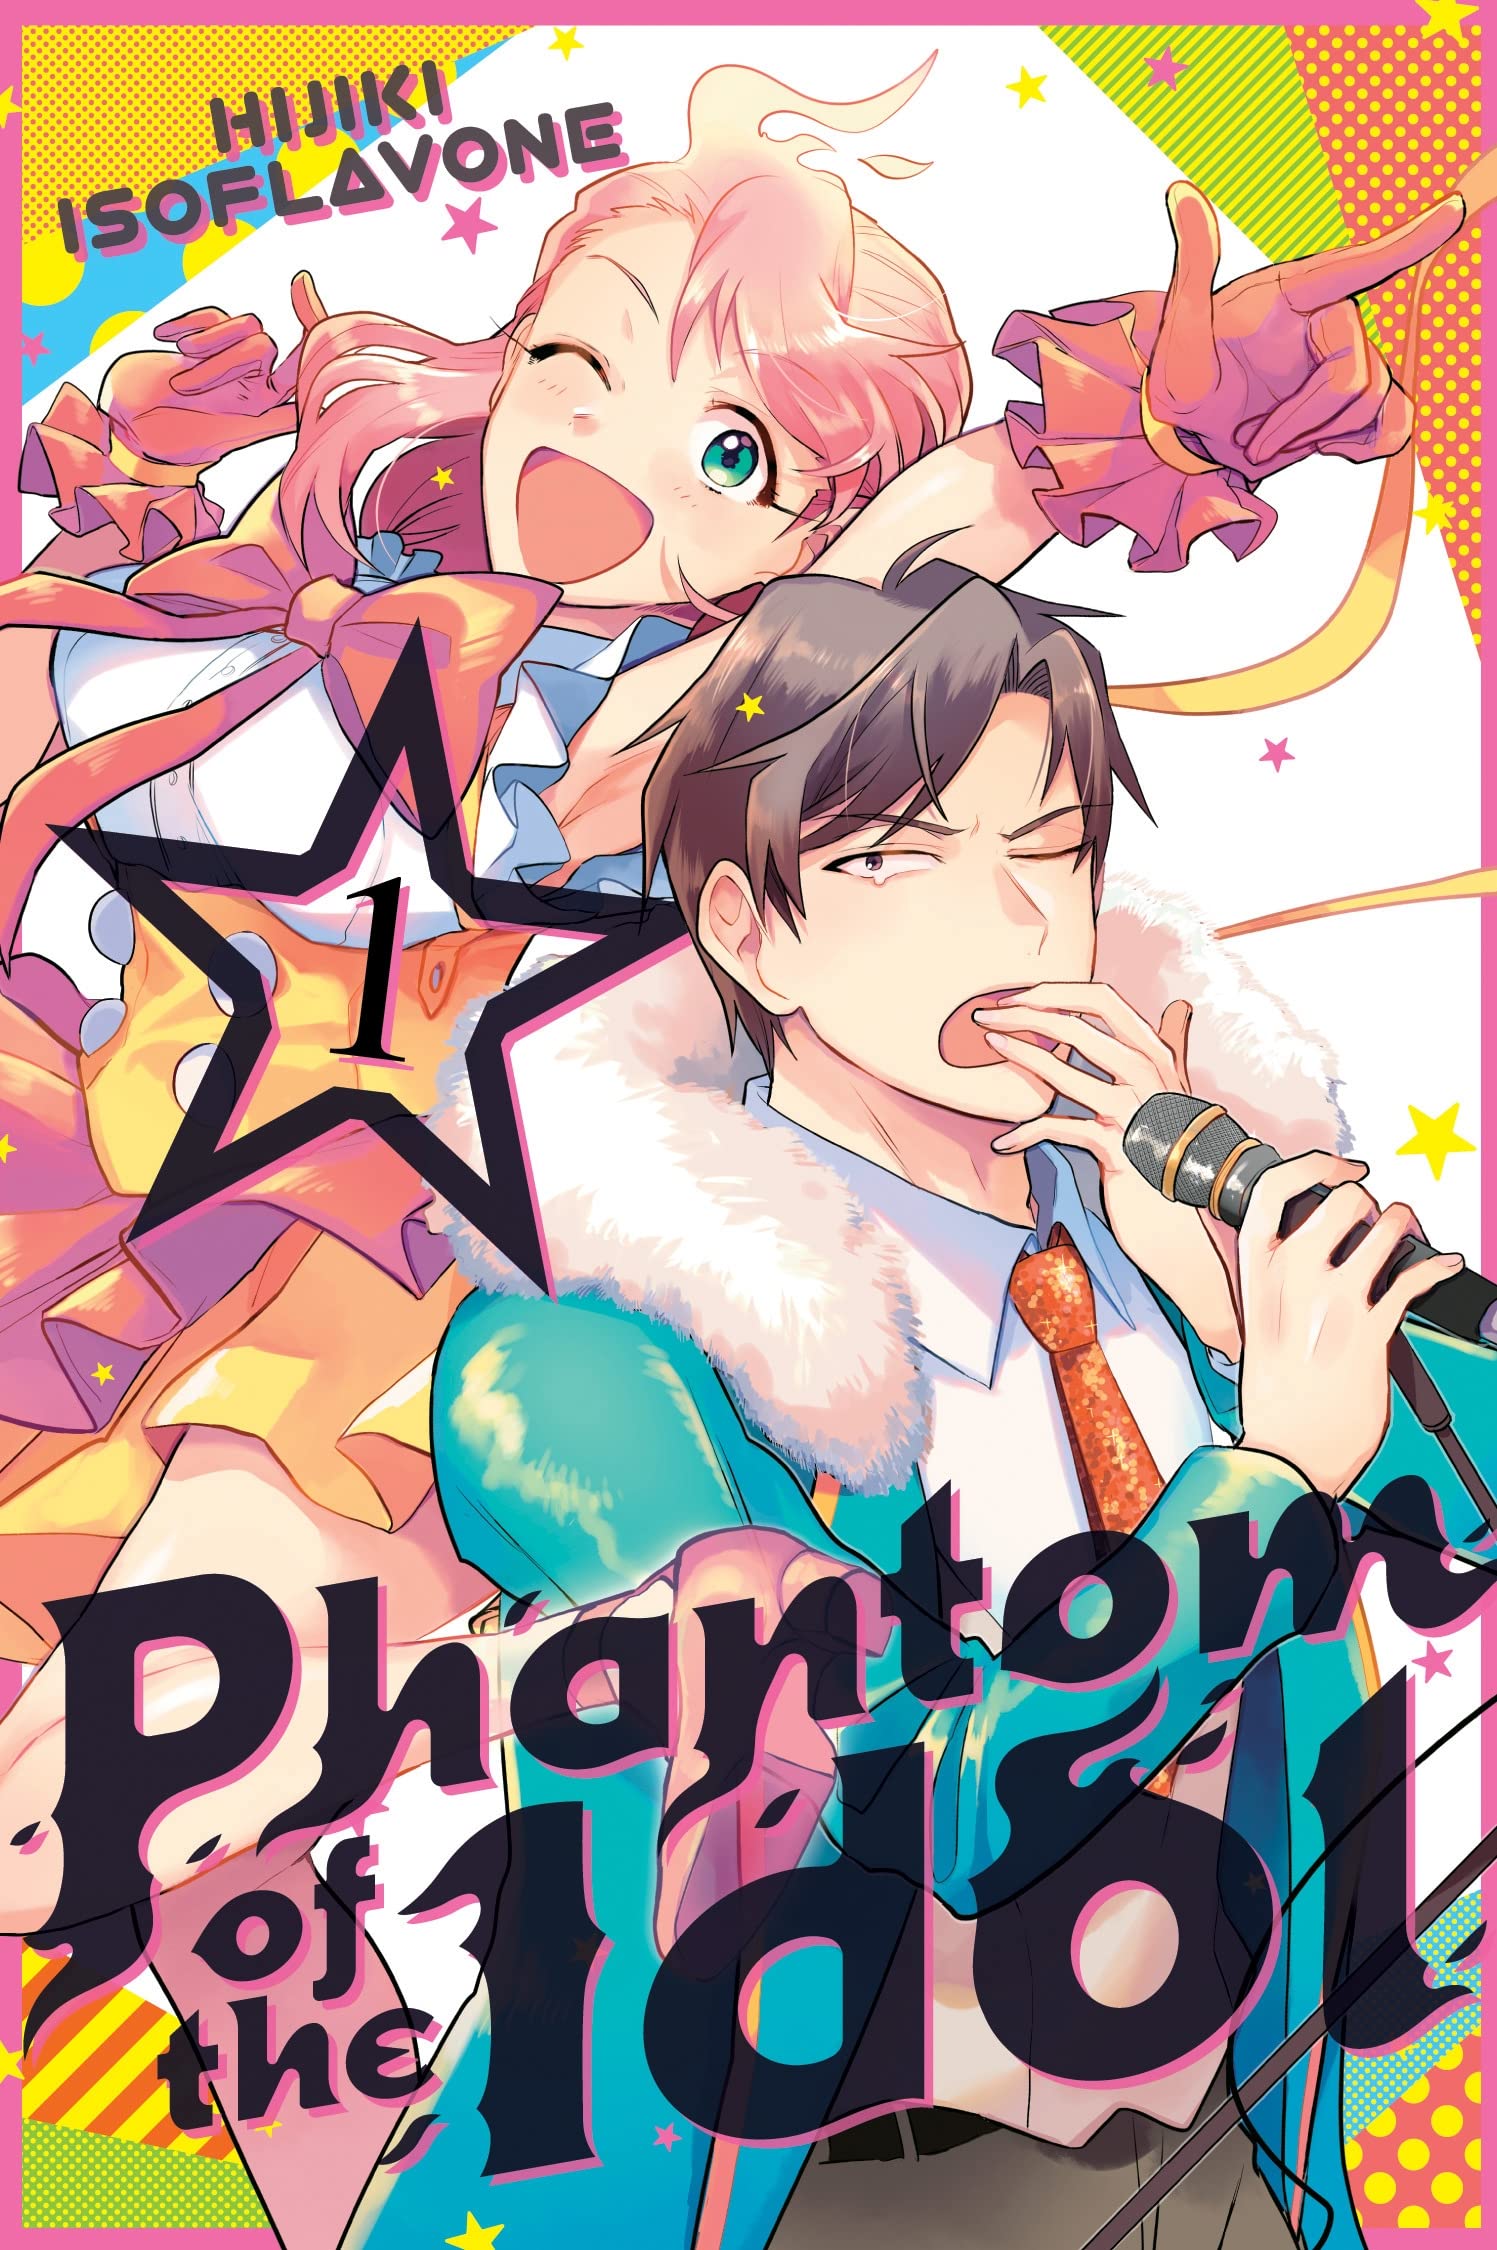 Phantom of the Idol - Volume 1 | Hijiki Isoflavone